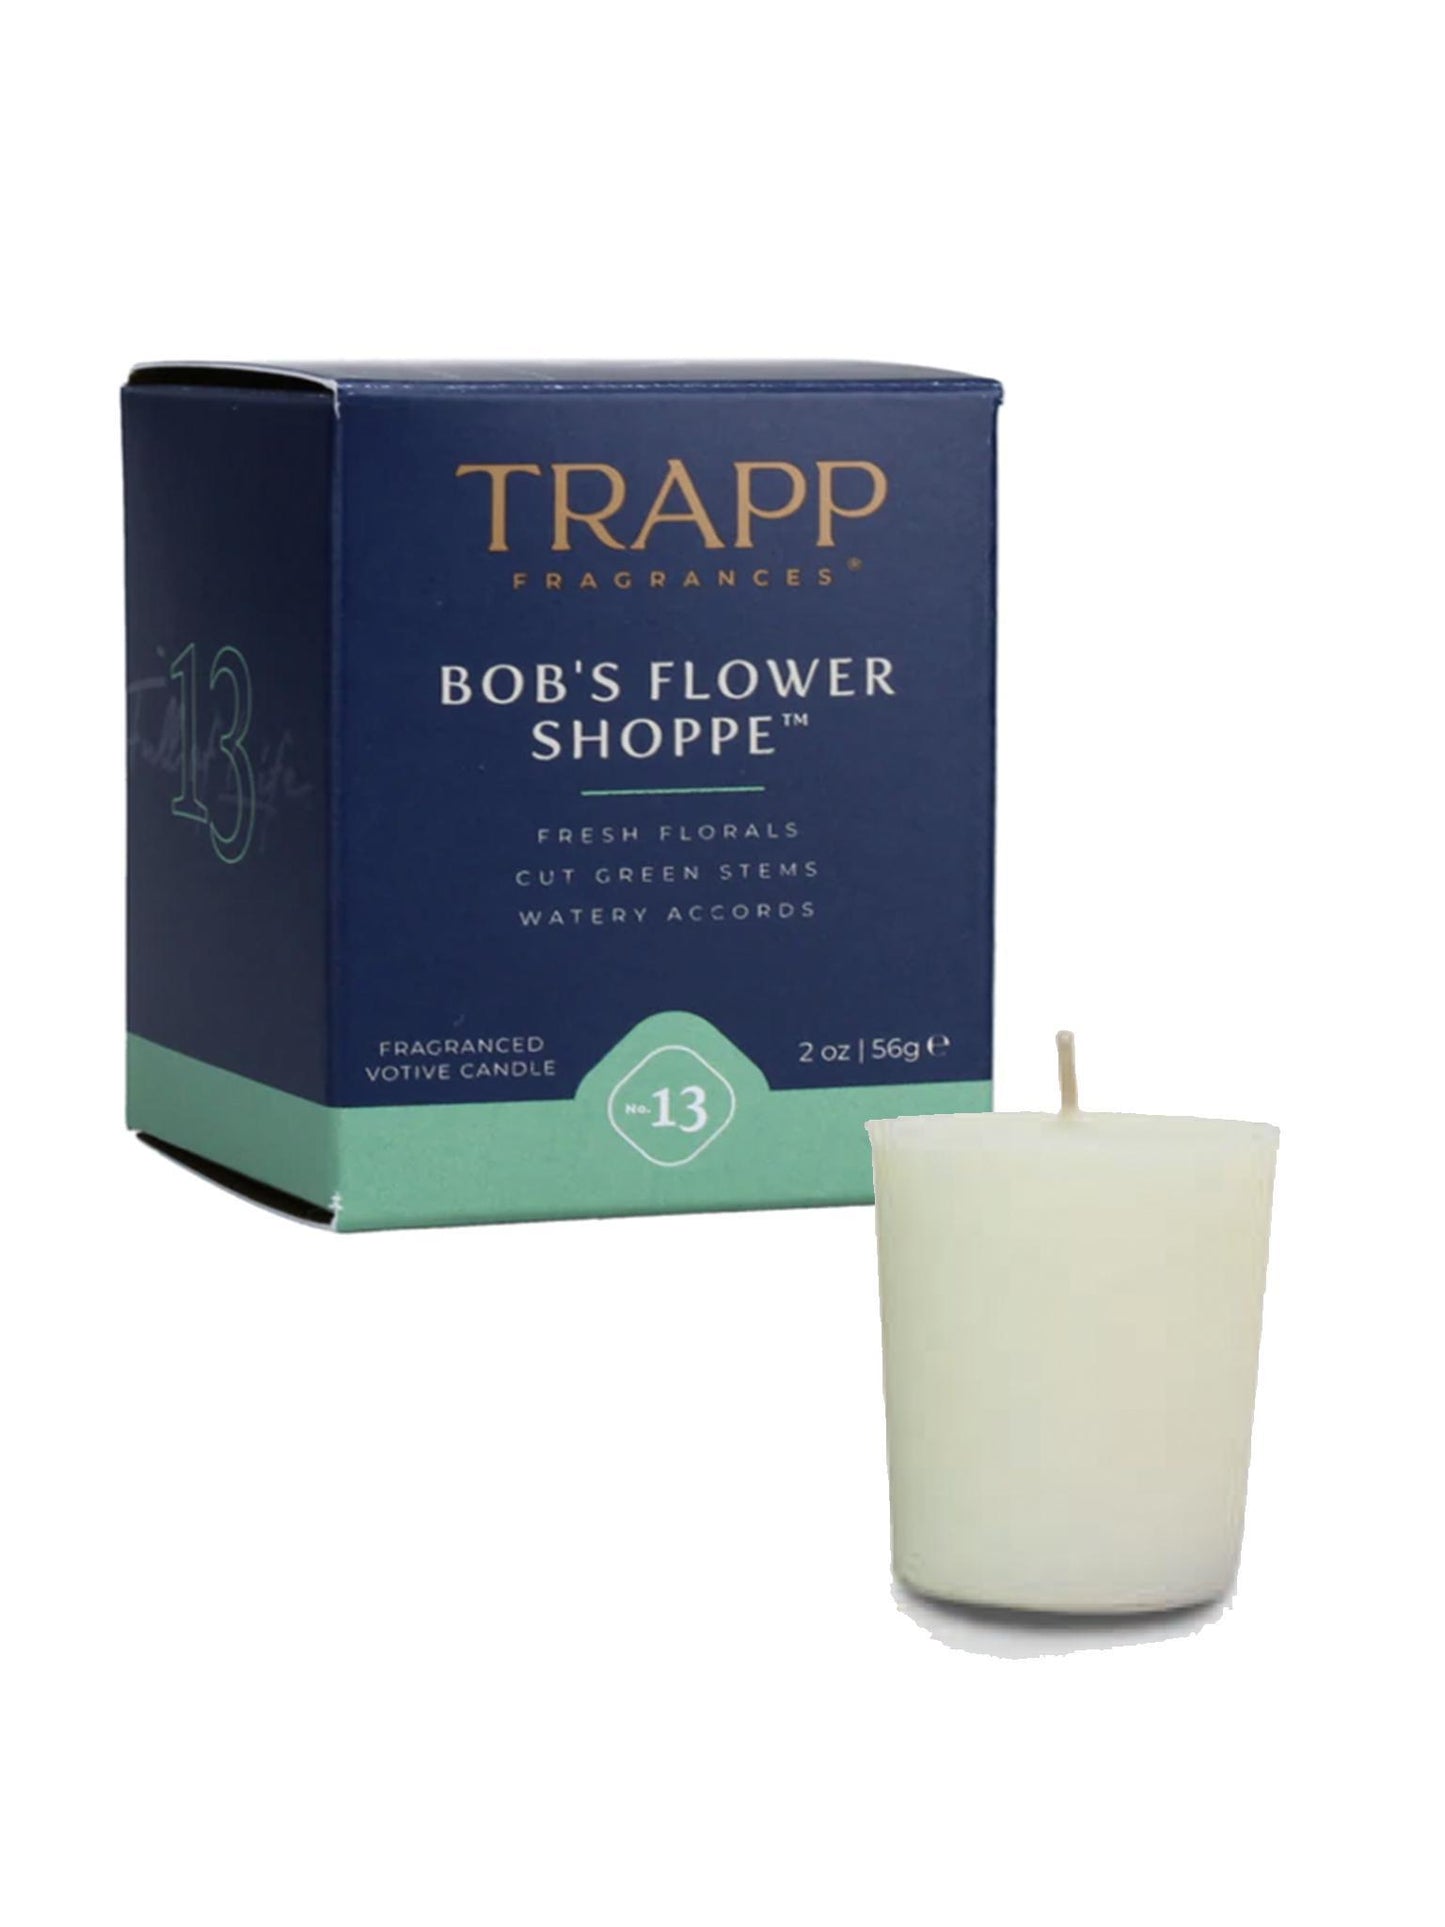 Trapp Bob's Flower Shoppe Votive Candle No. 13